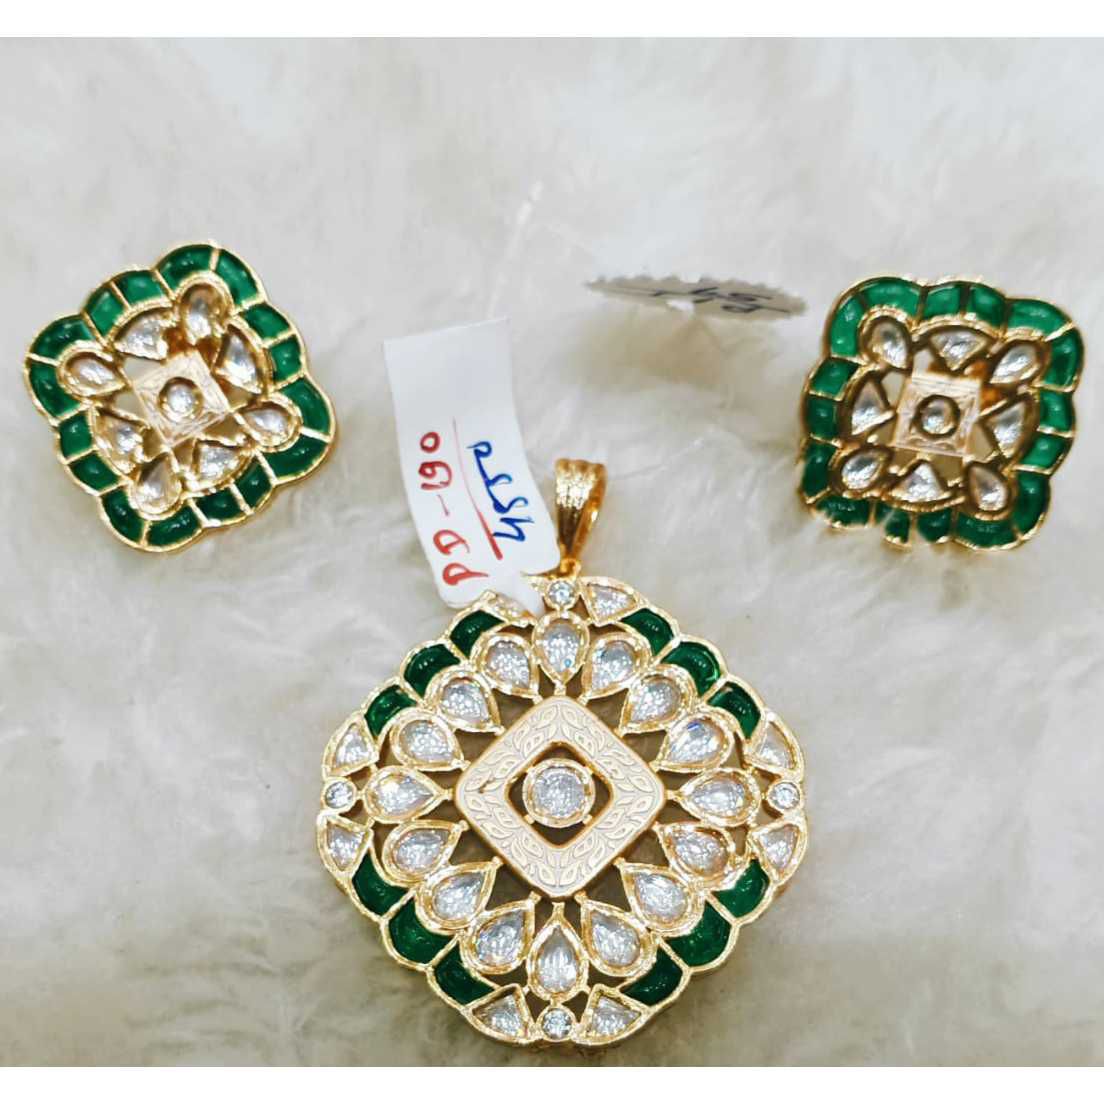 Square Design Bikaneri Kundan's White And Green Pendant And Earring Set1068